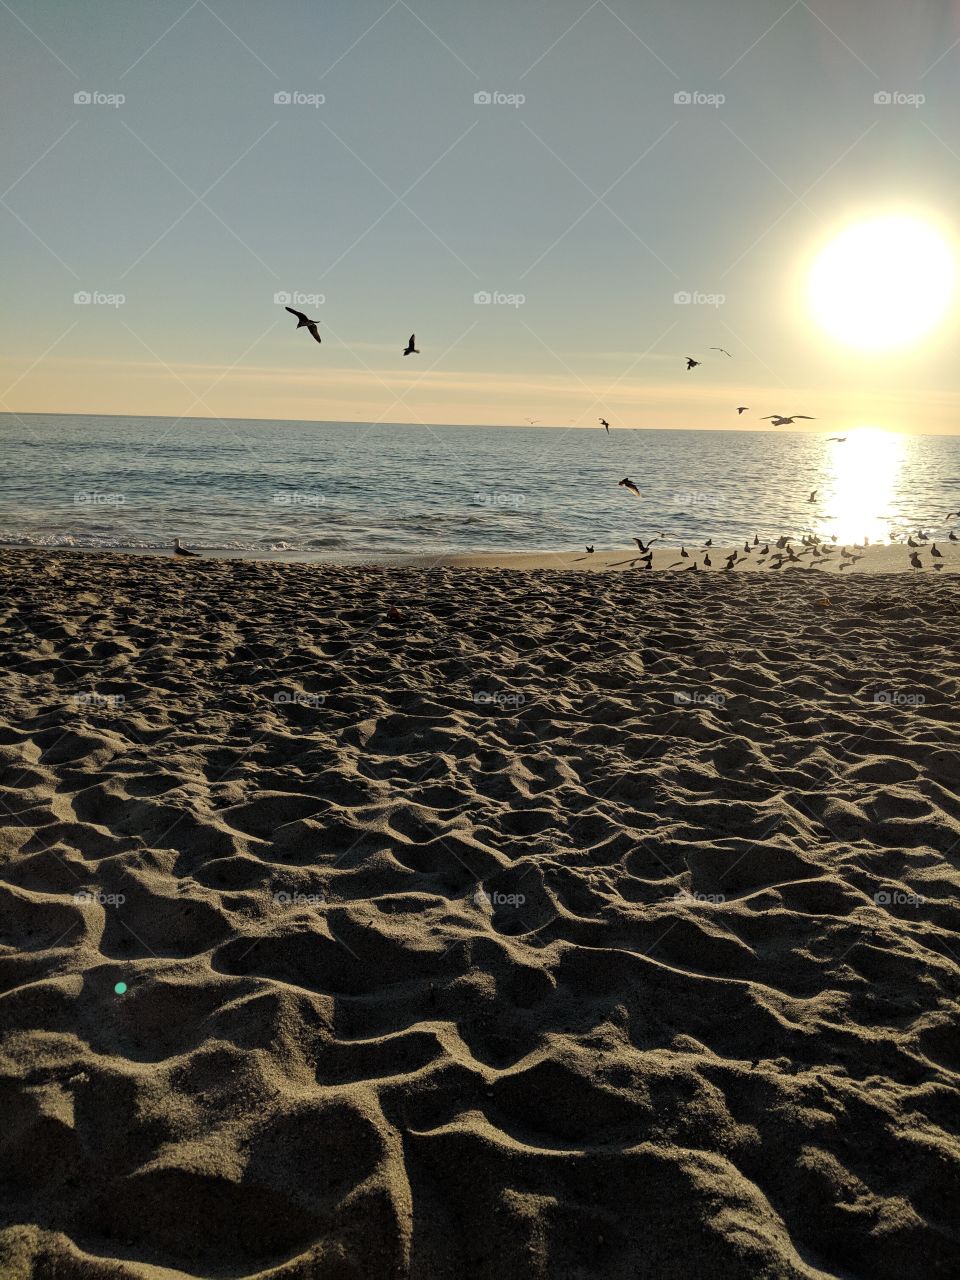 Seagulls on Laguna Beach, CA at sunset